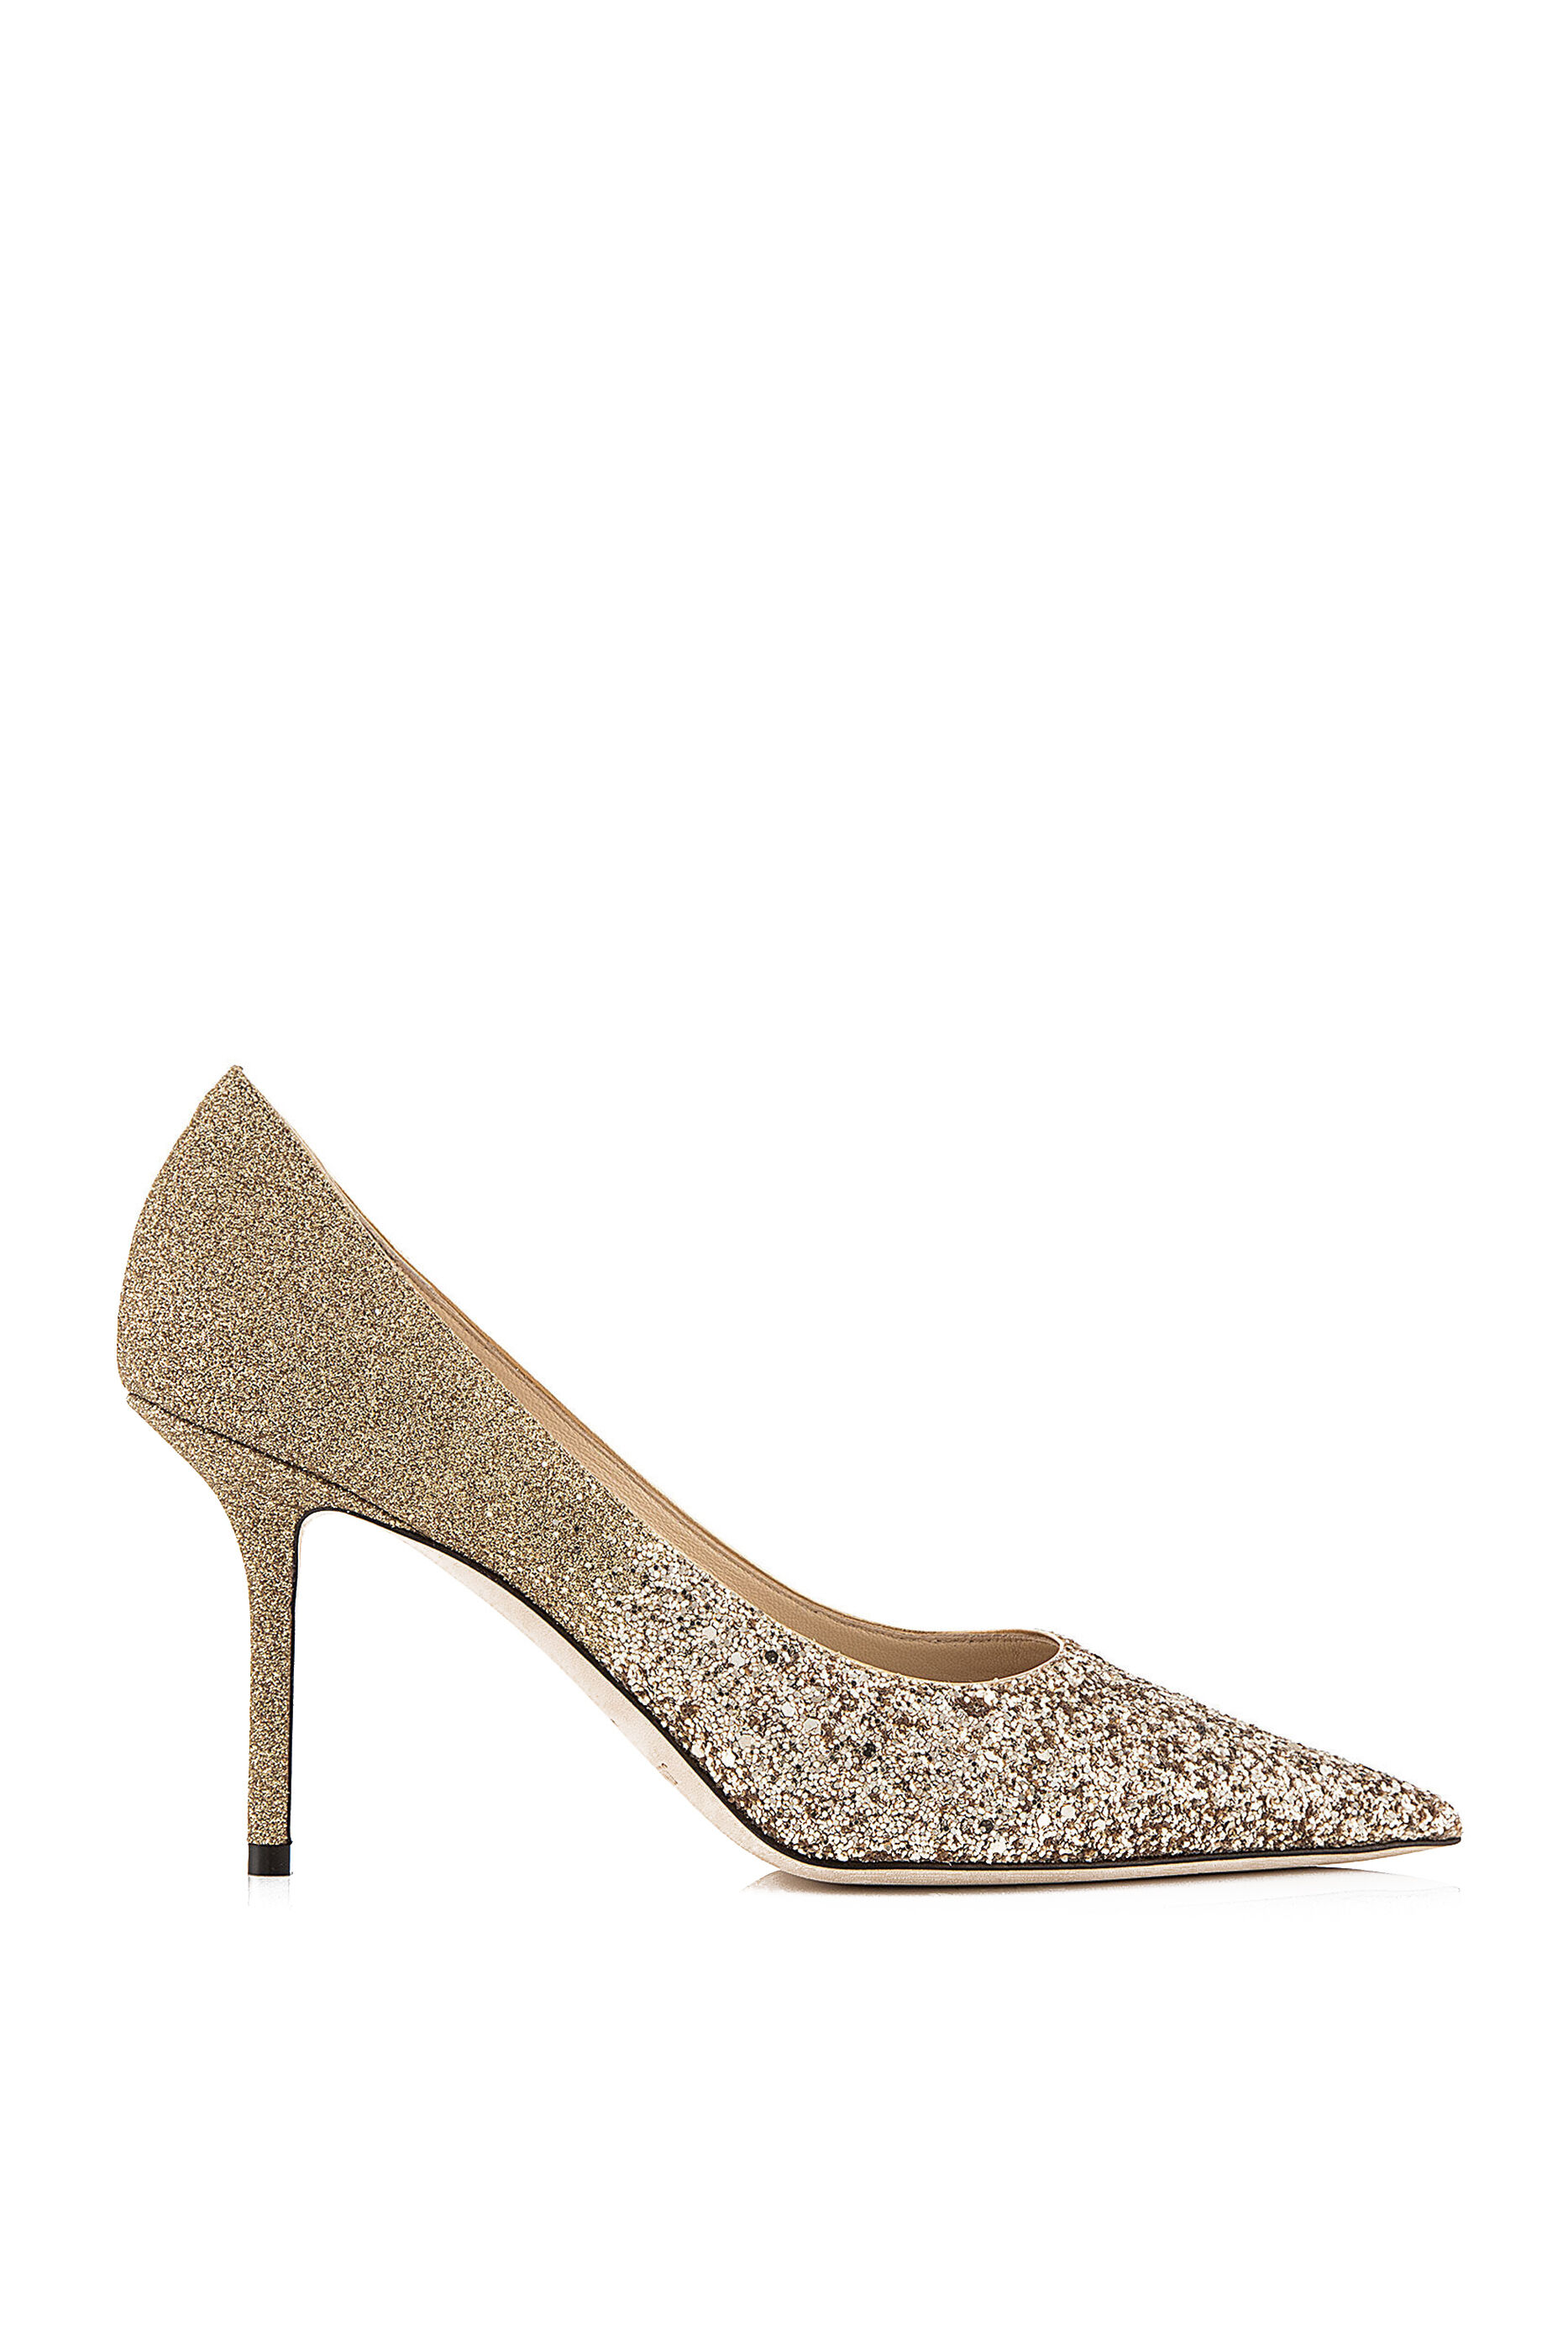 gold glitter shoes womens